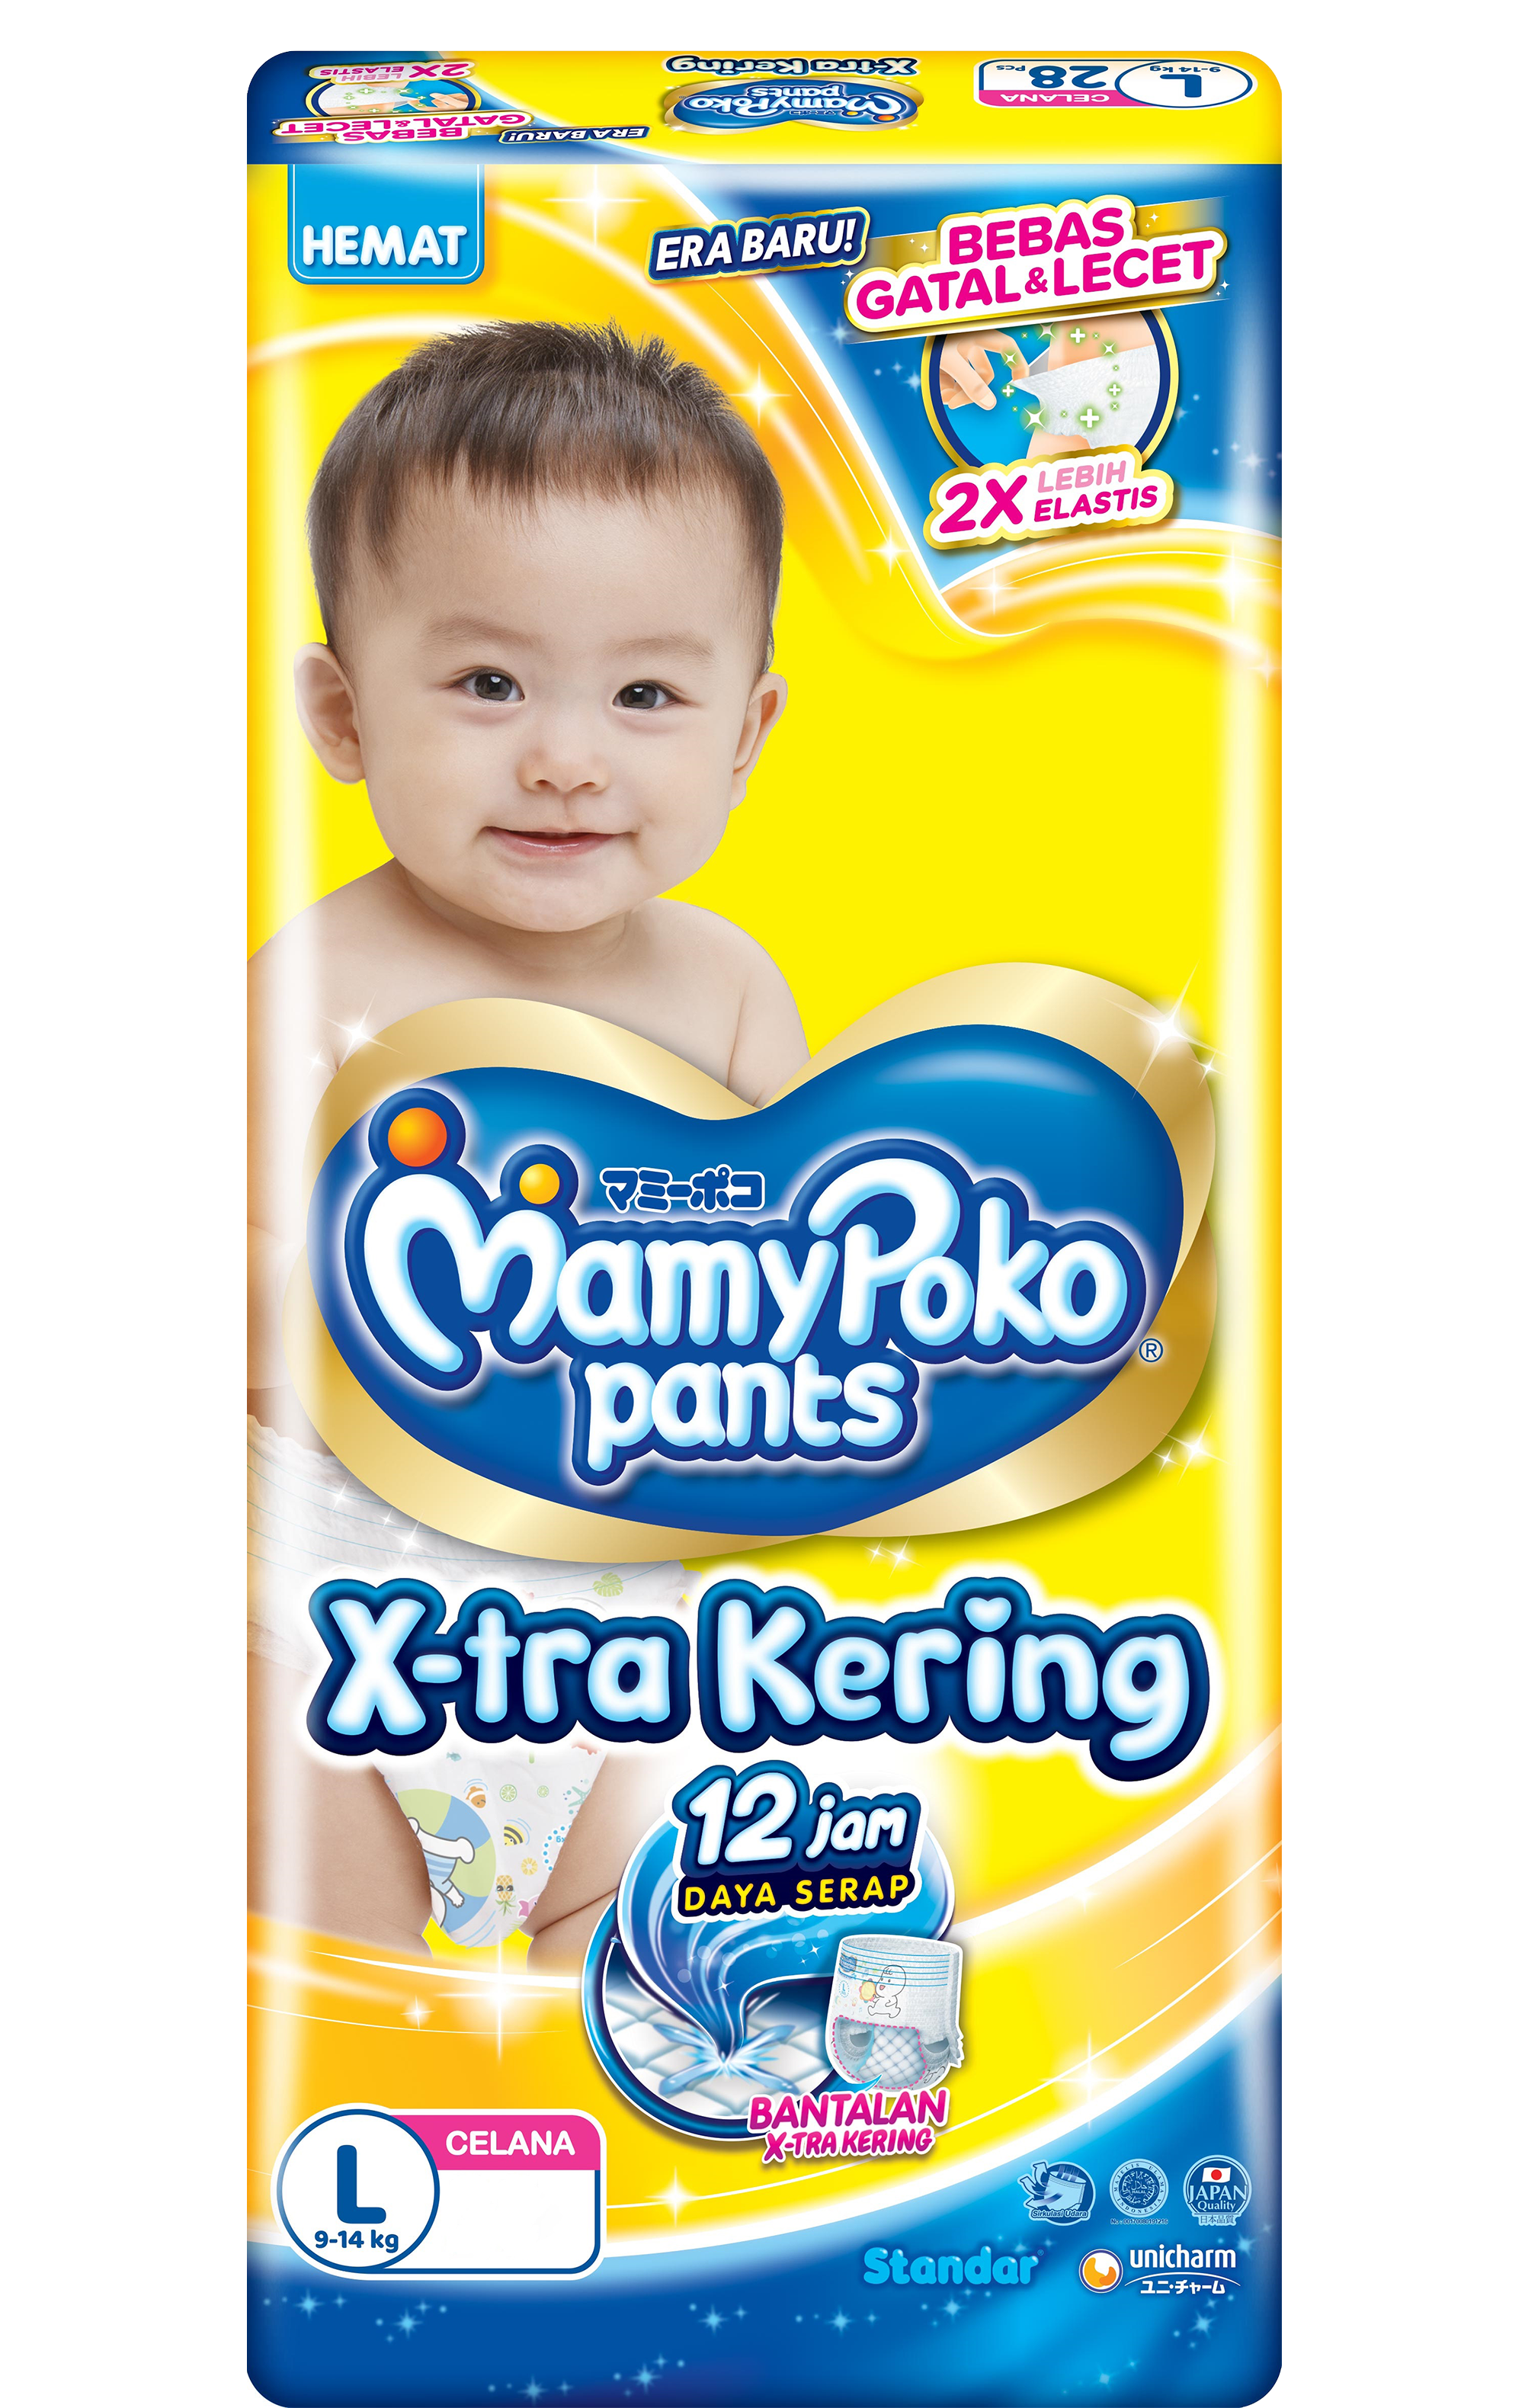 MamyPoko Pants X-tra Kering l